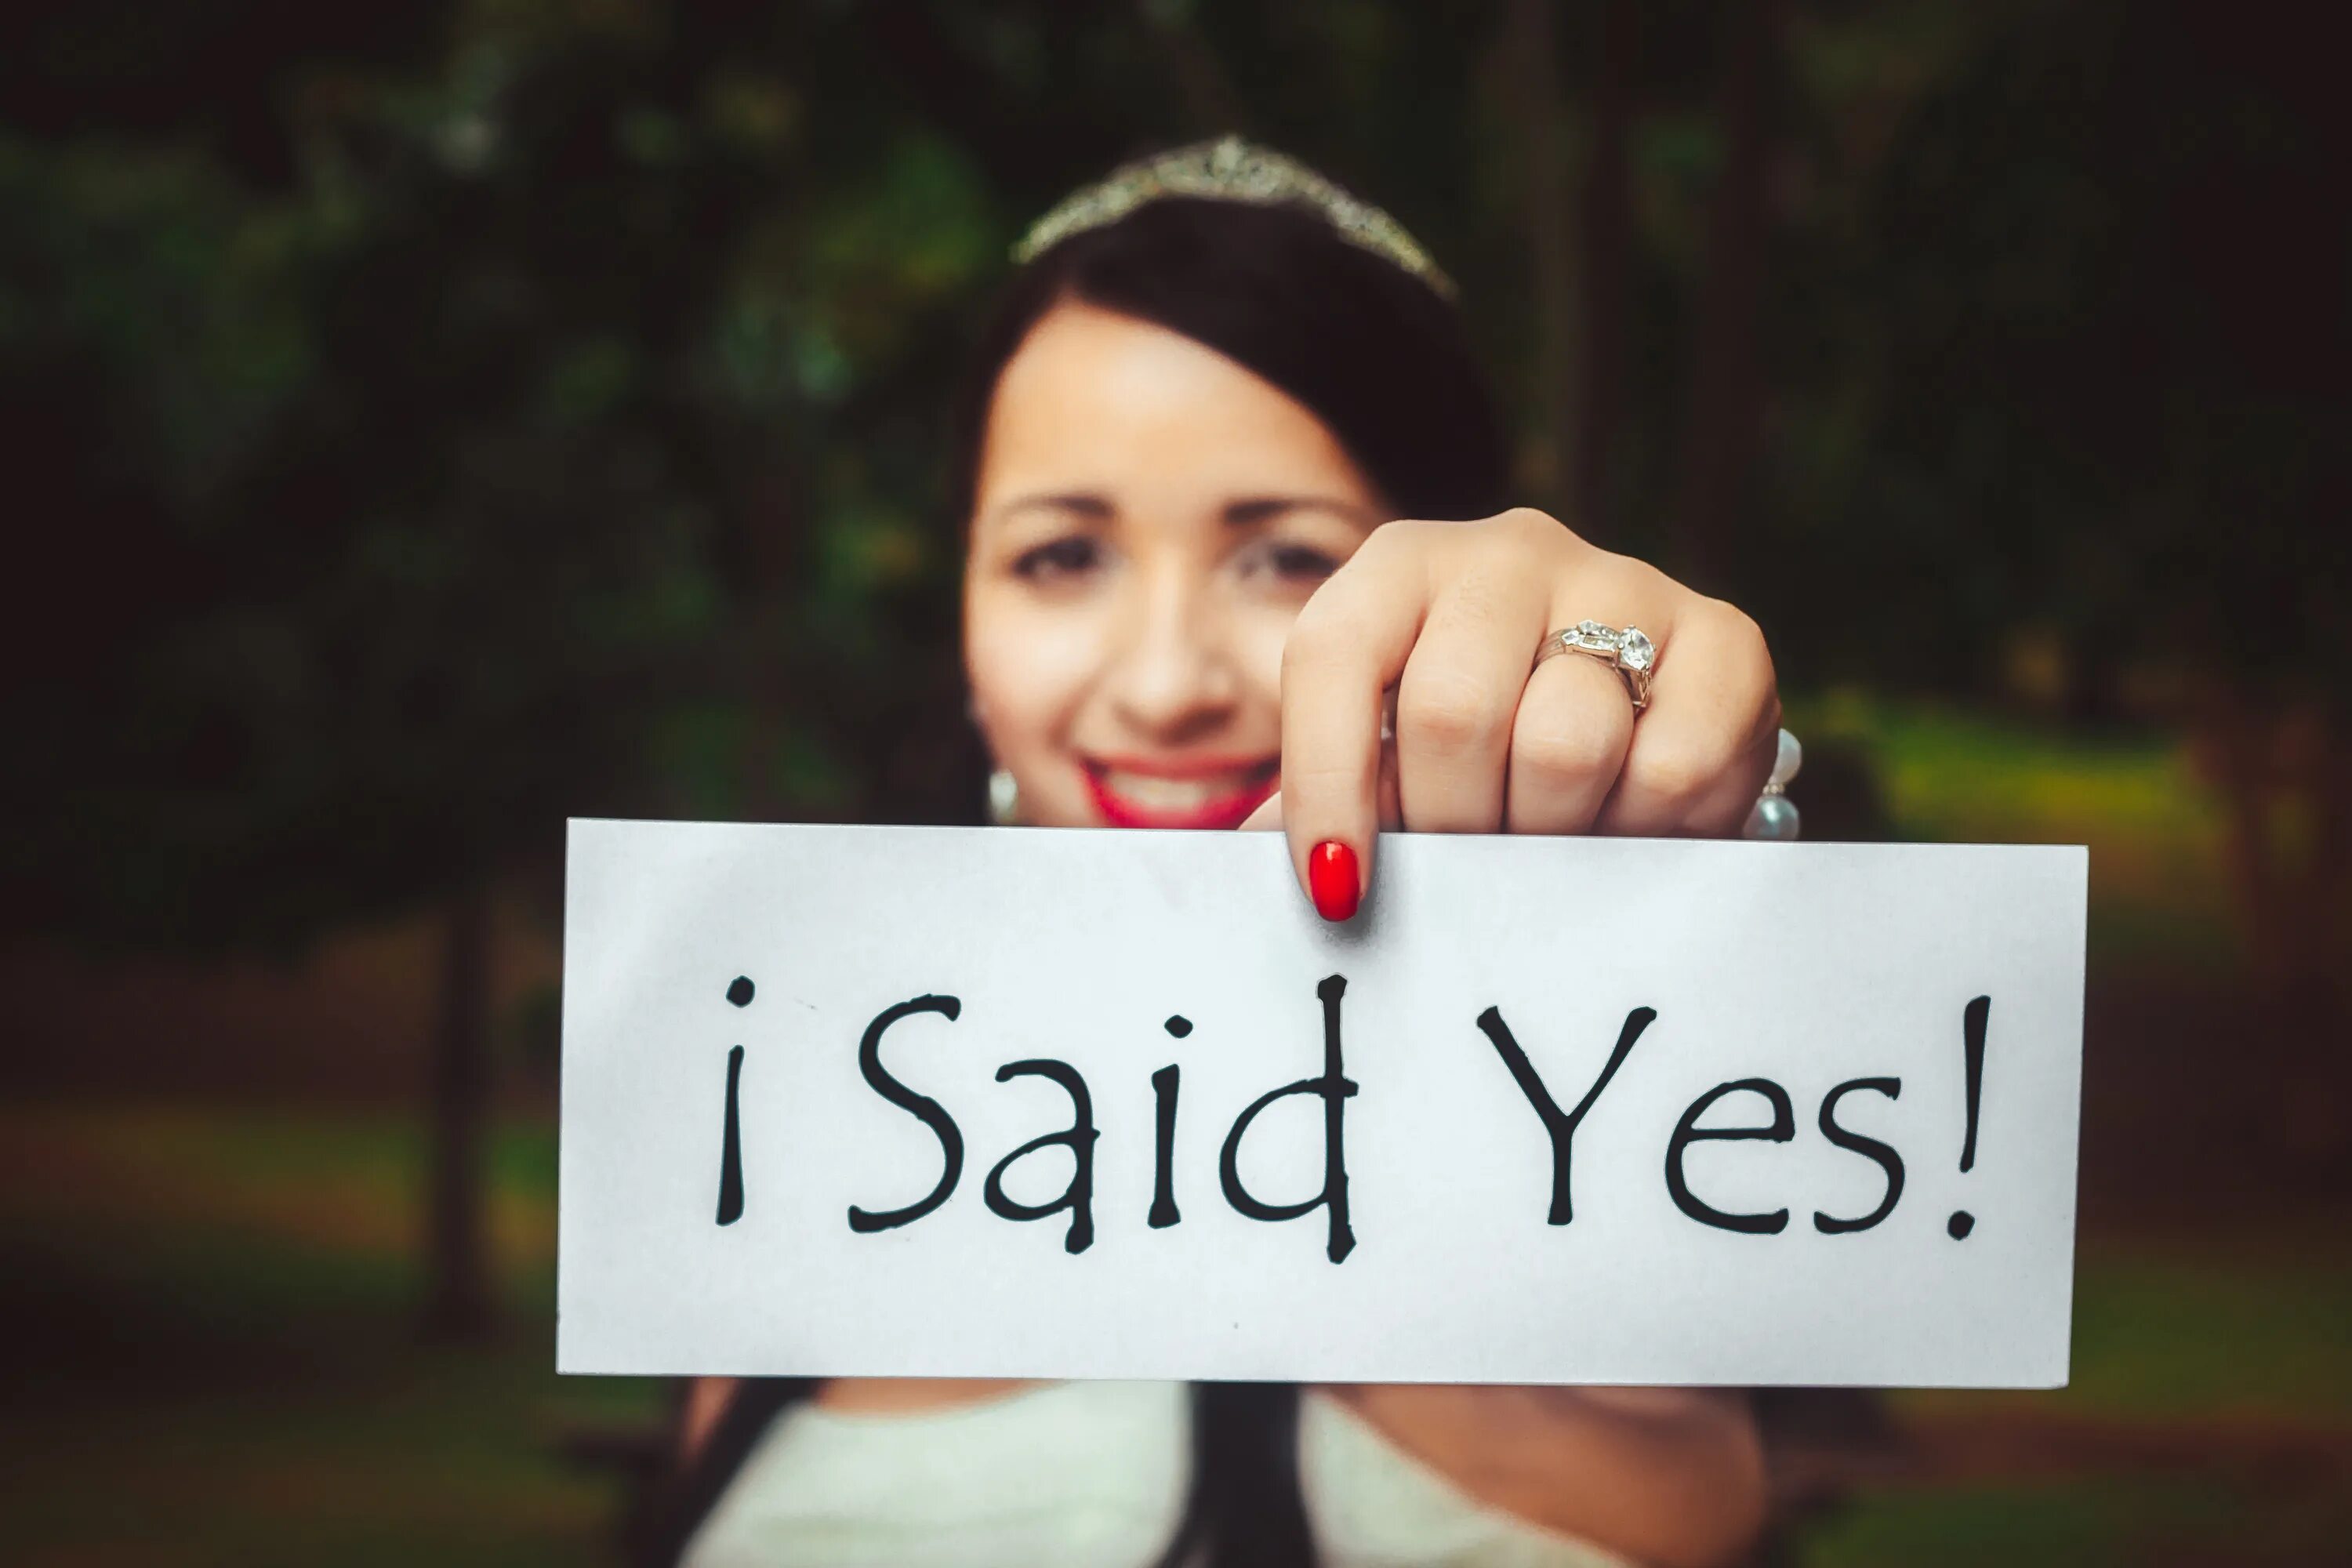 Said Yes. I said Yes. Картинка Yes. Логотип i said Yes.